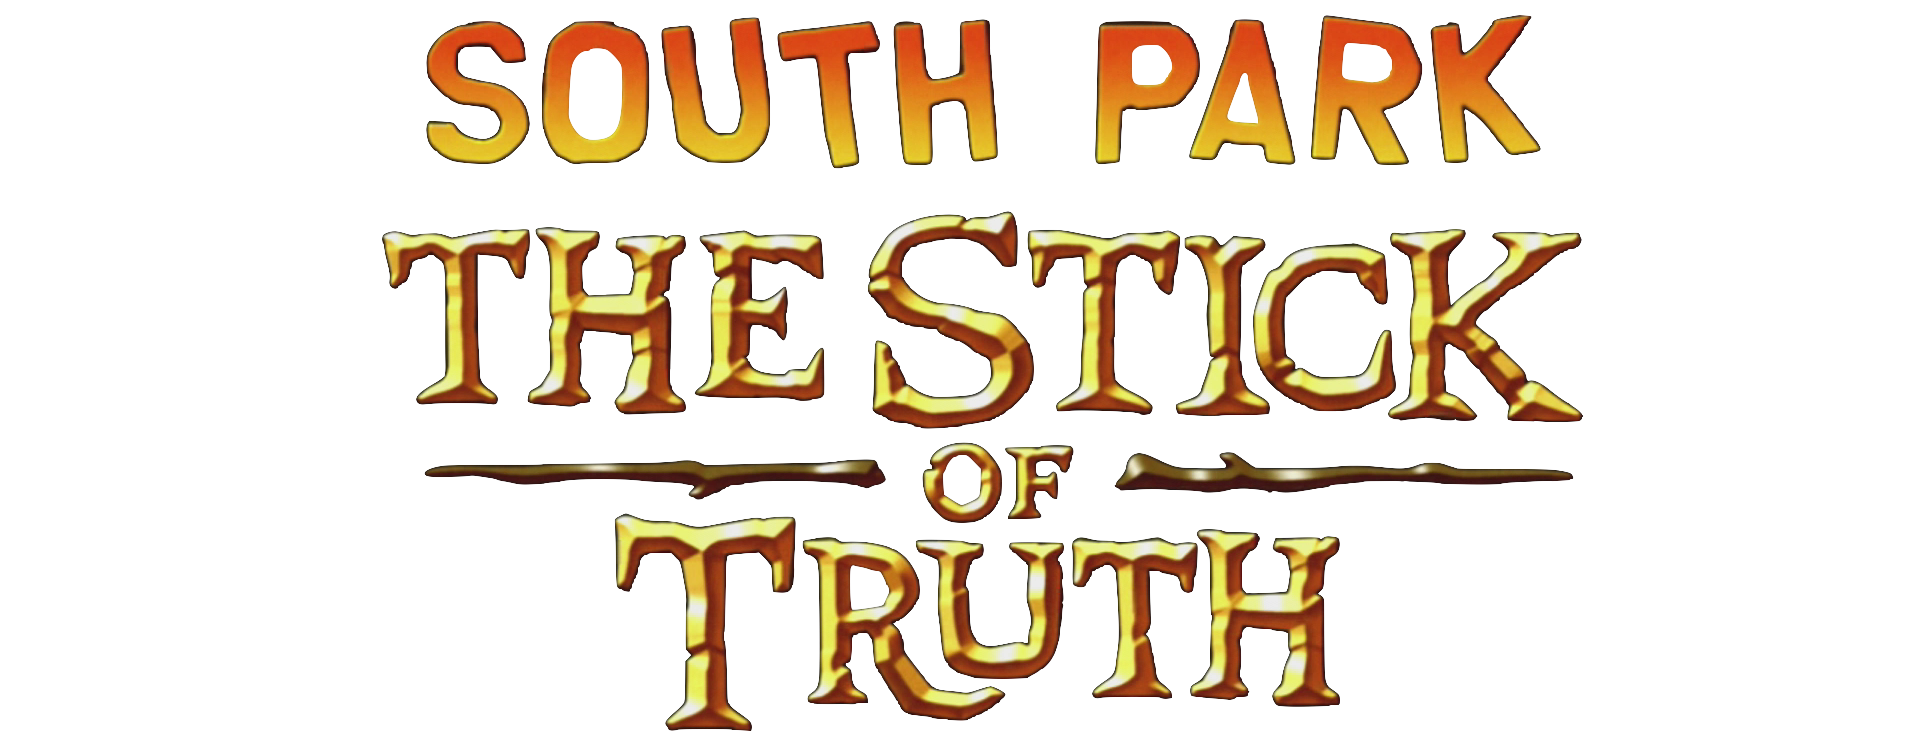 South park the stick of truth купить для steam фото 119